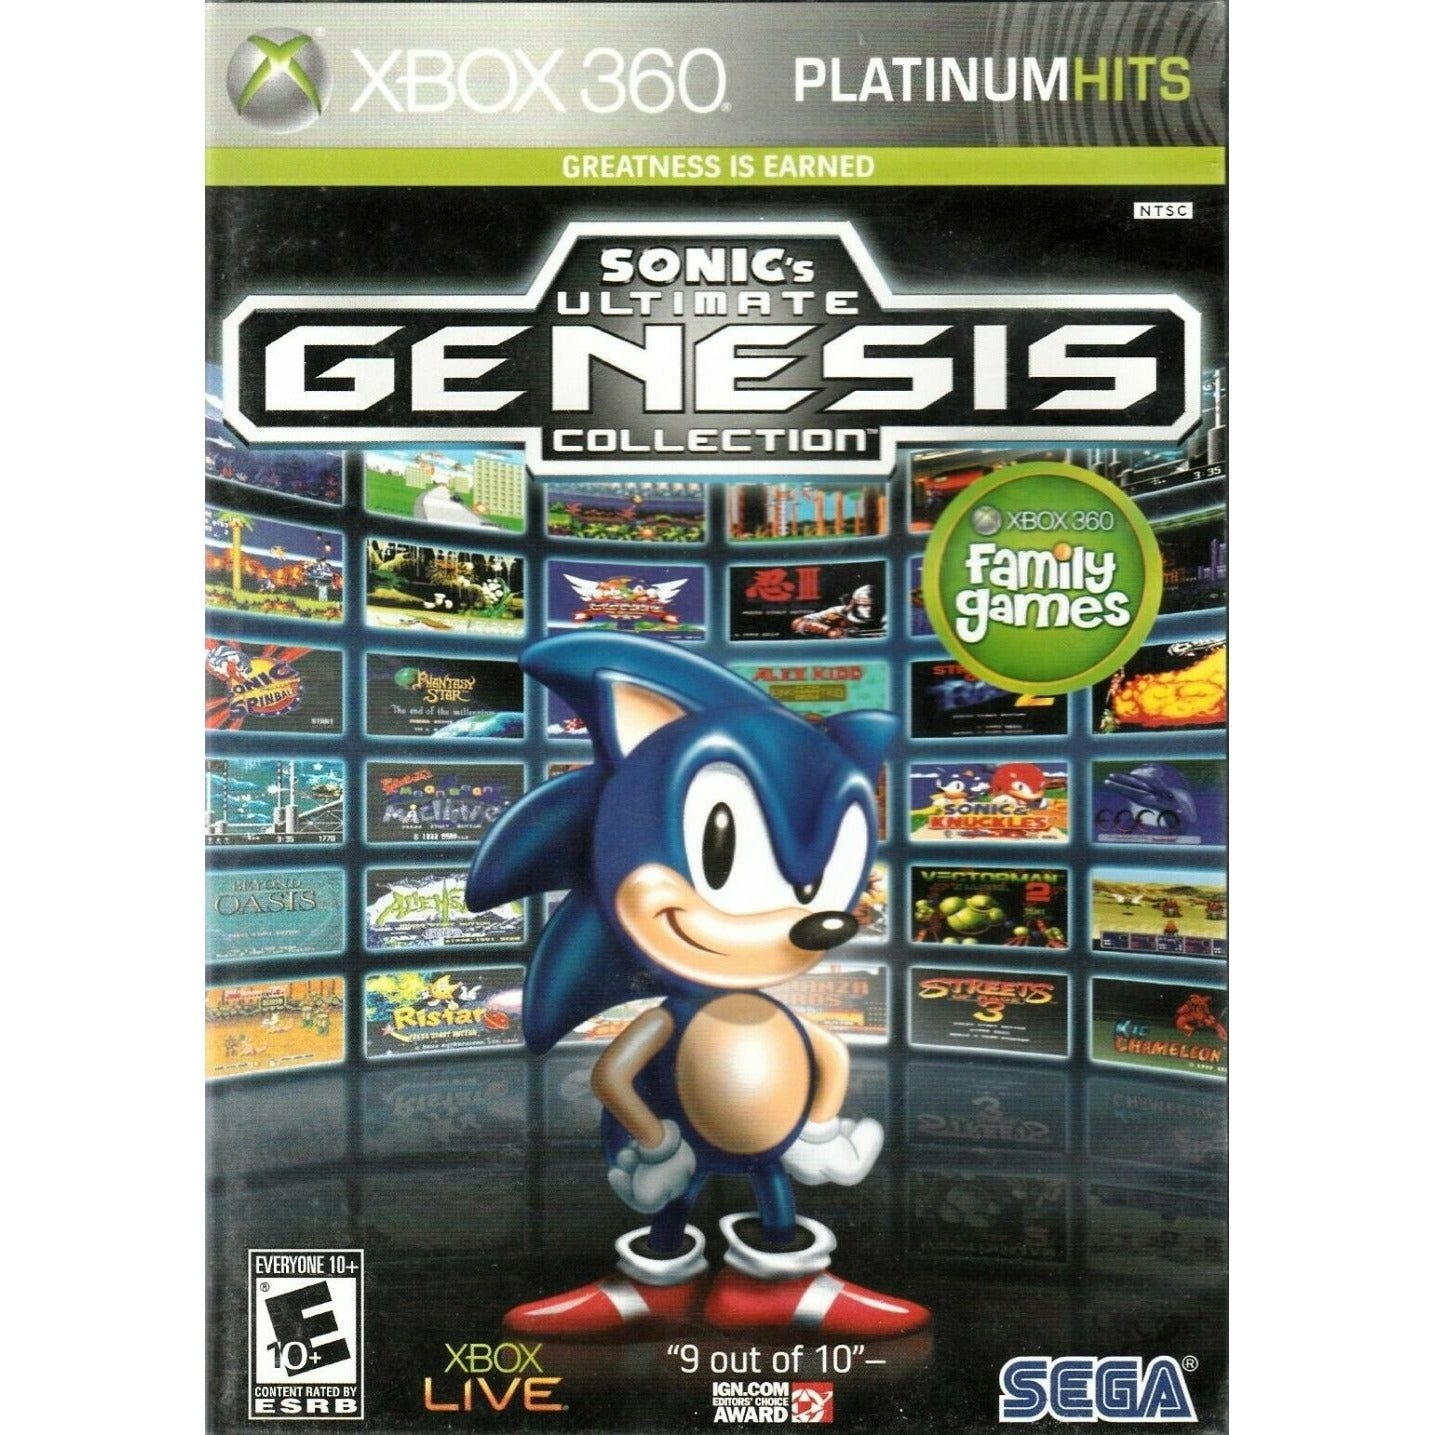 XBOX 360 - Collection Ultimate Genesis de Sonic